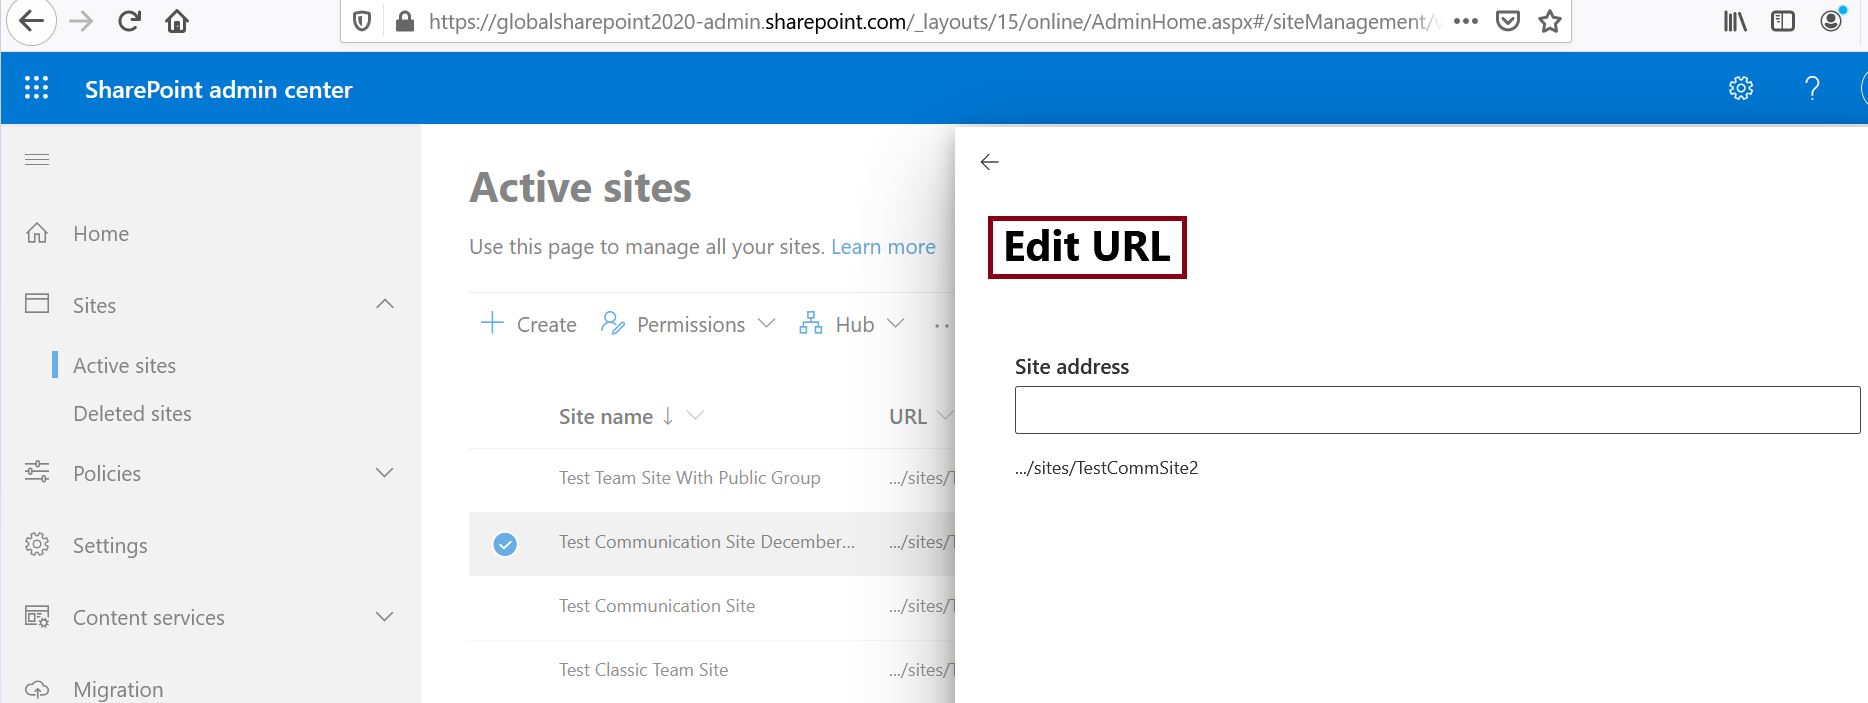 Edit URL in SharePoint Online from SharePoint admin center